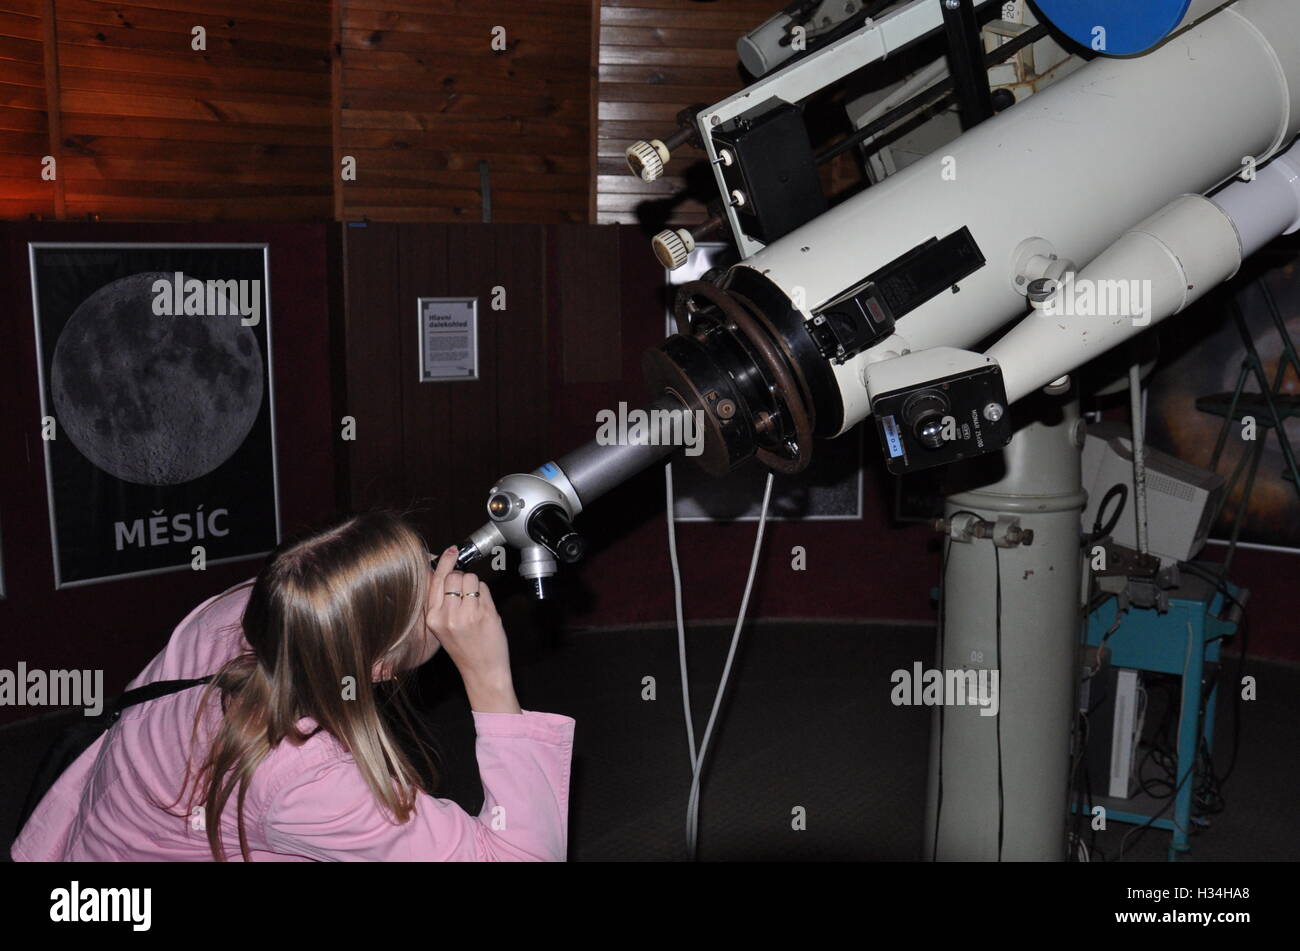 amateur astronomical observatory space